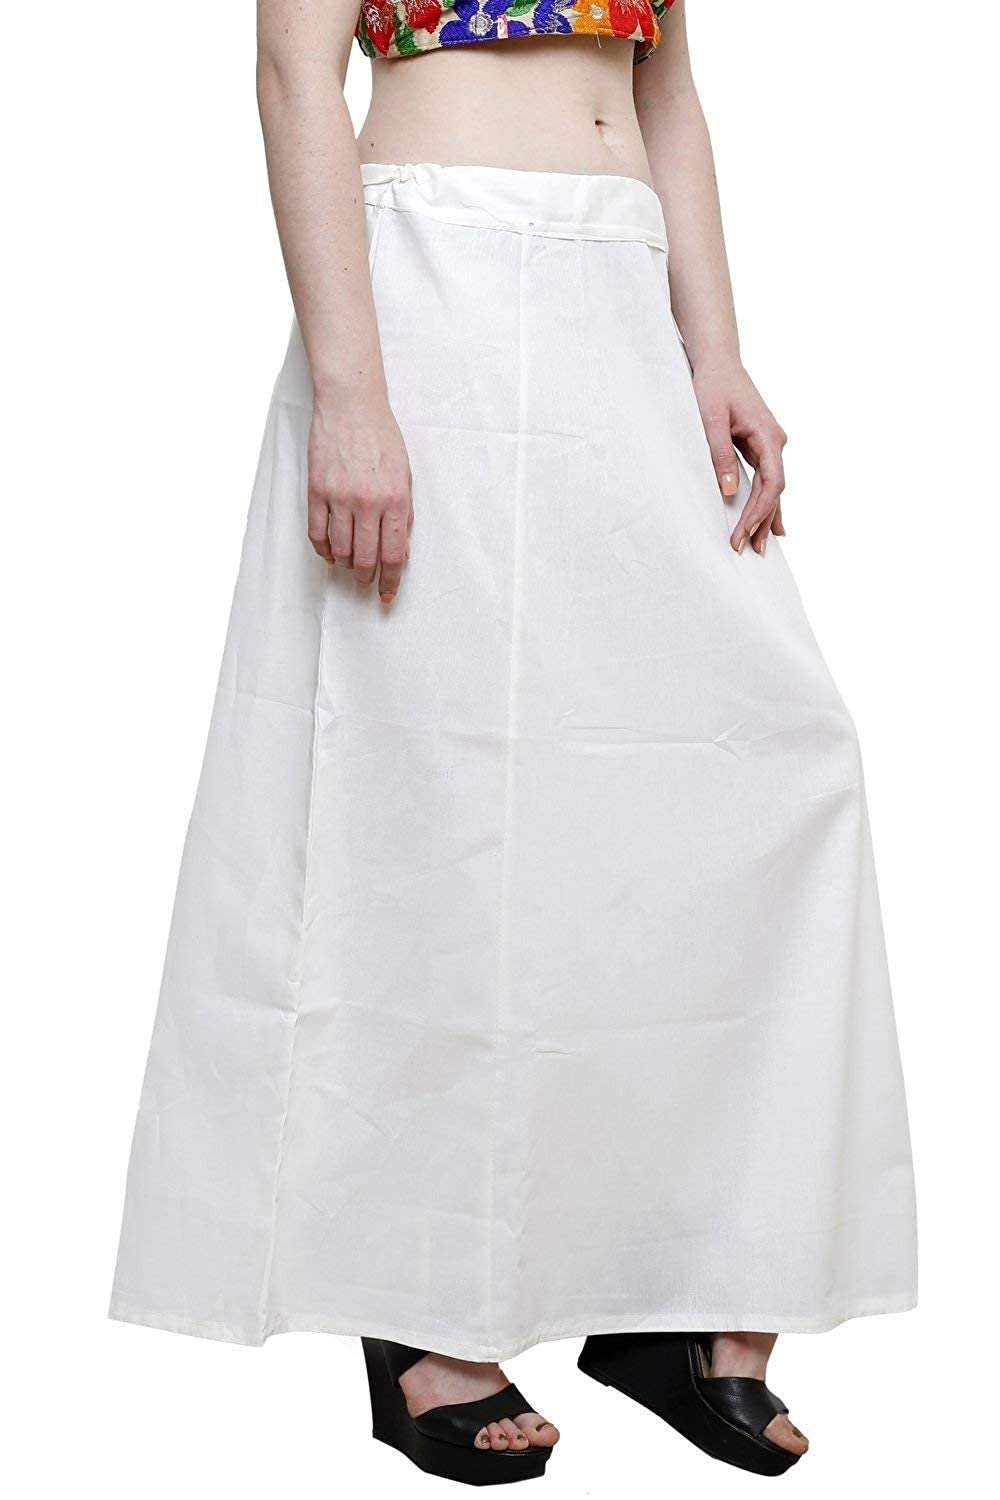 petticoat shapewear skirt for saree +Readymade Saree Blouse for